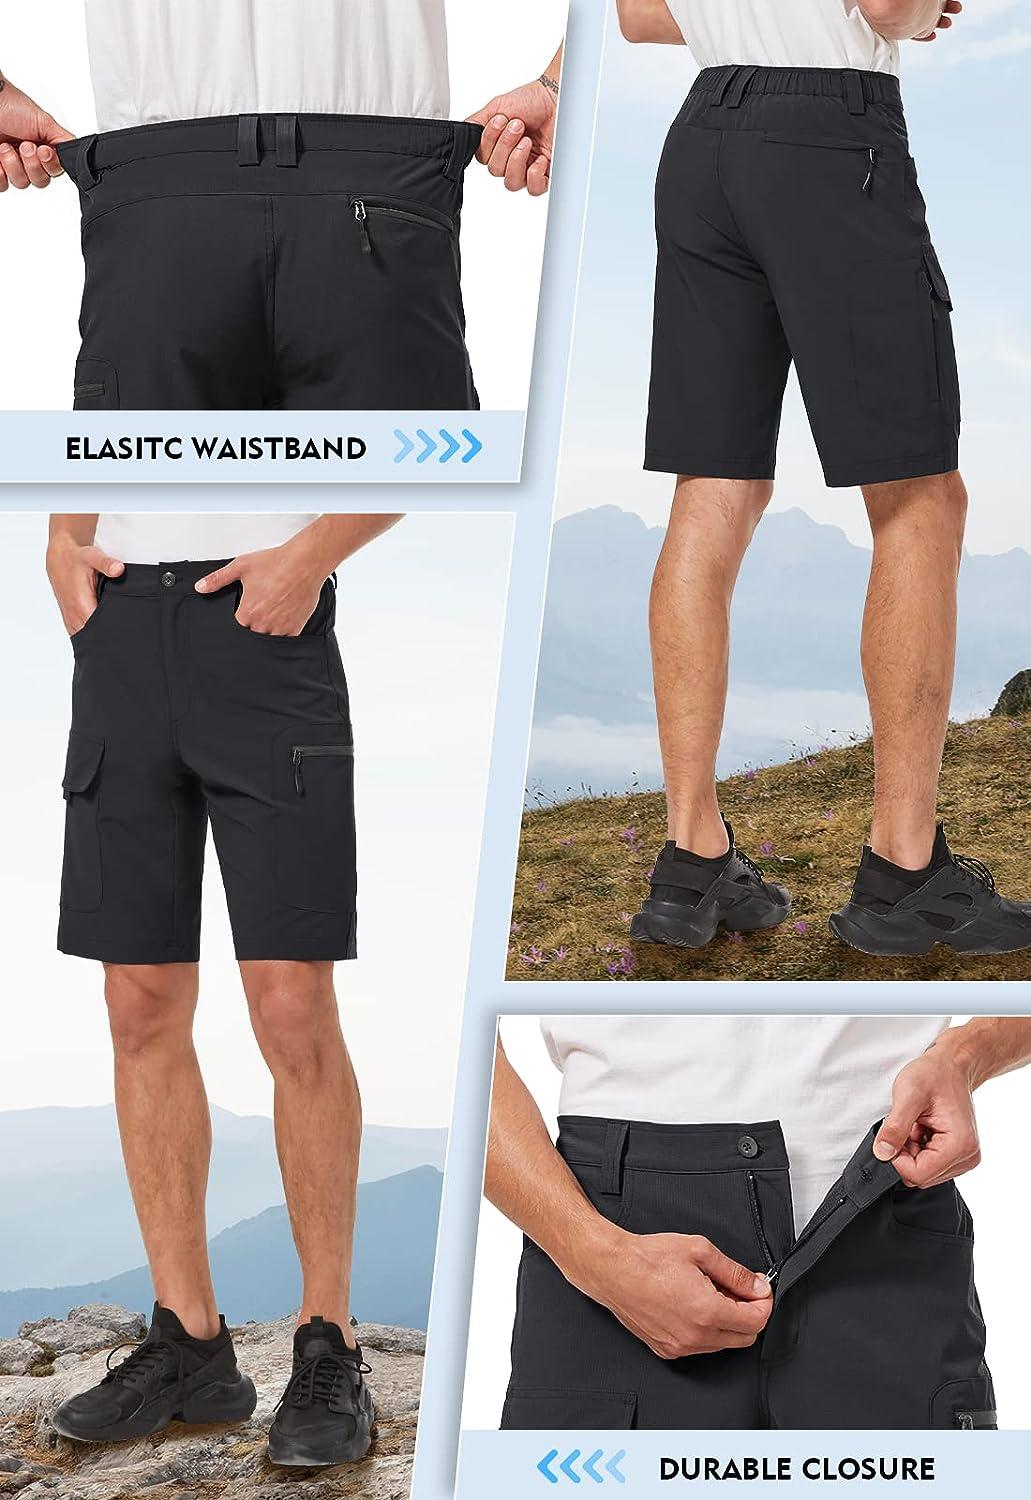 Hiauspor Men's Hiking Cargo Shorts 9/10 Quick Dry Lightweight